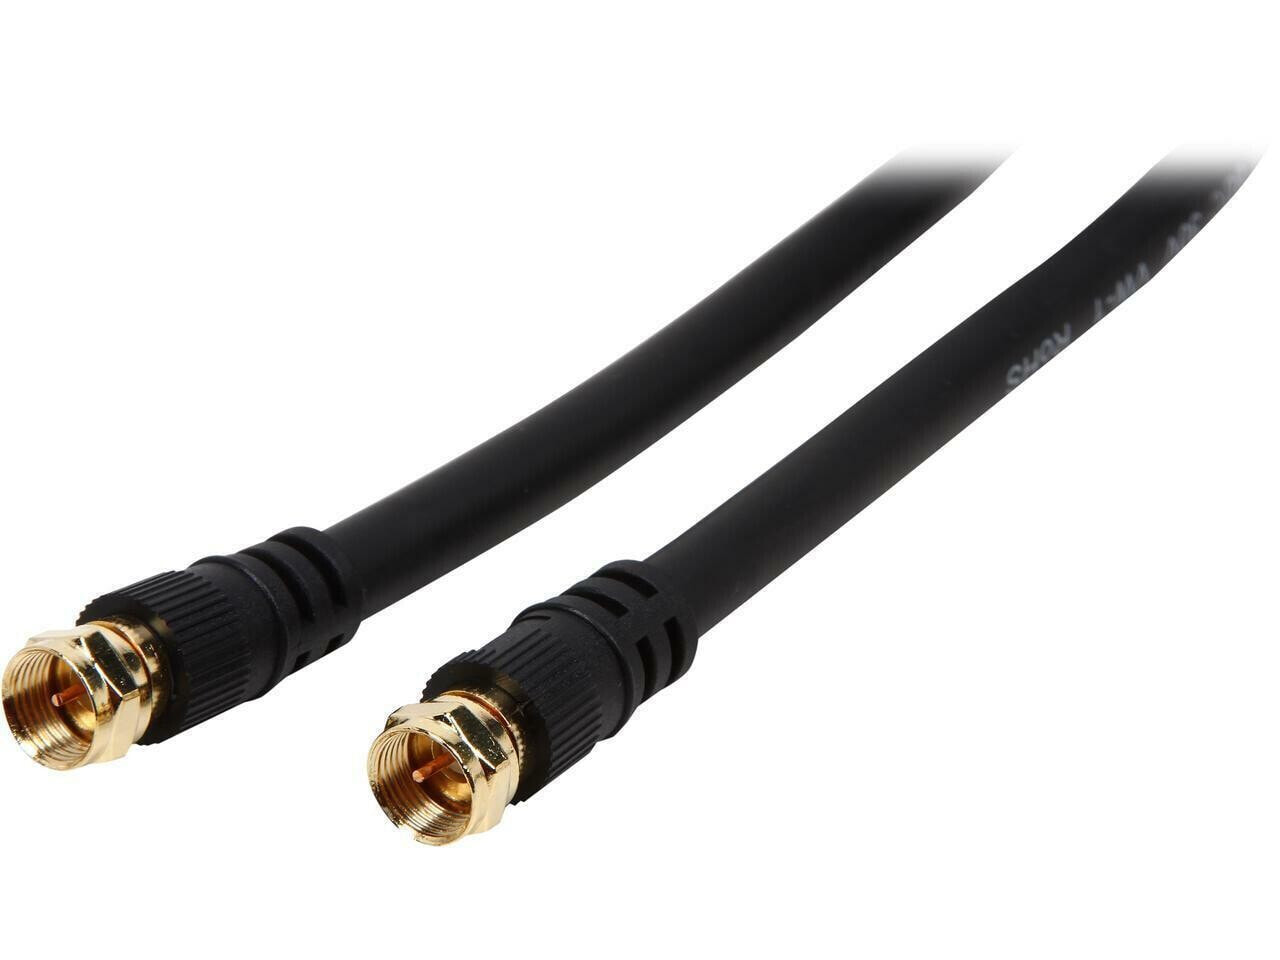 C2G 6ft Value Series F-type RG6 Coaxial Video Cable коаксиальный кабель 1,8 m F-RG6 Черный 29132